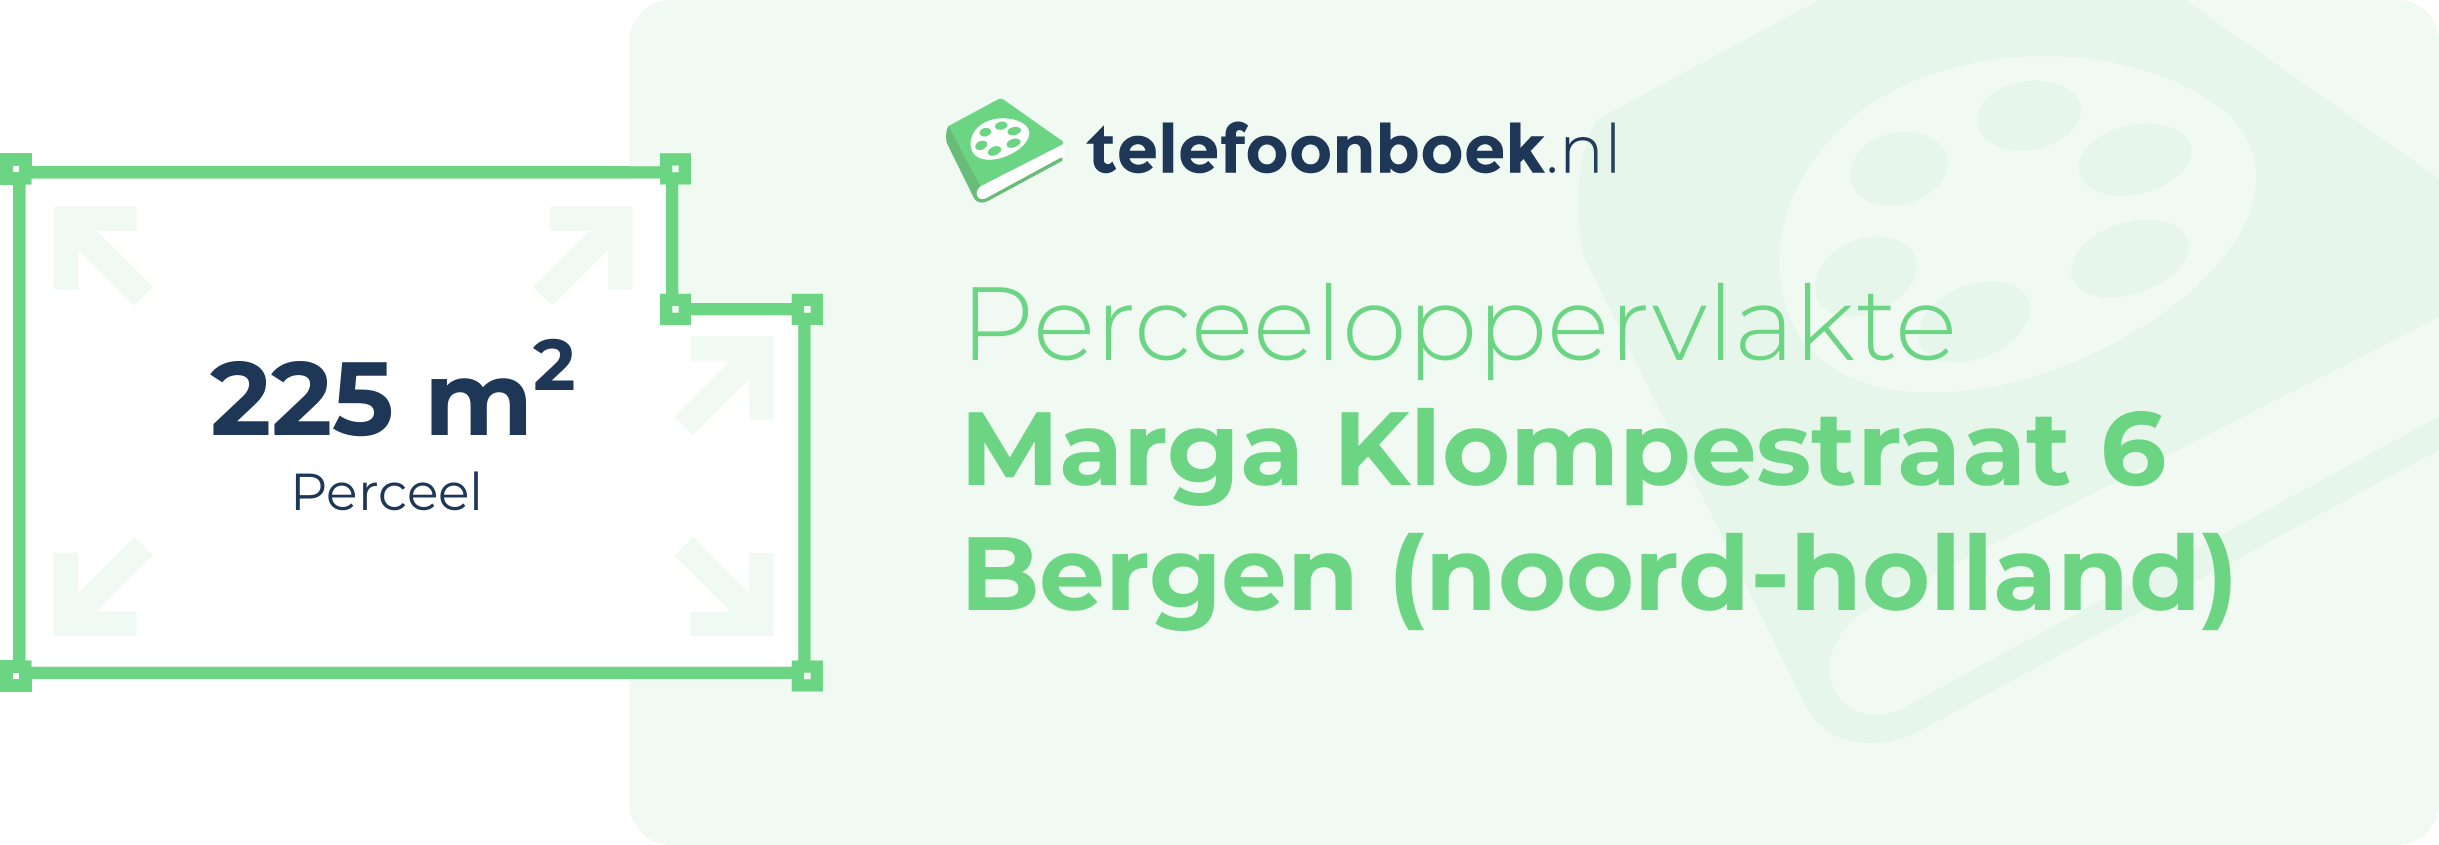 Perceeloppervlakte Marga Klompestraat 6 Bergen (Noord-Holland)